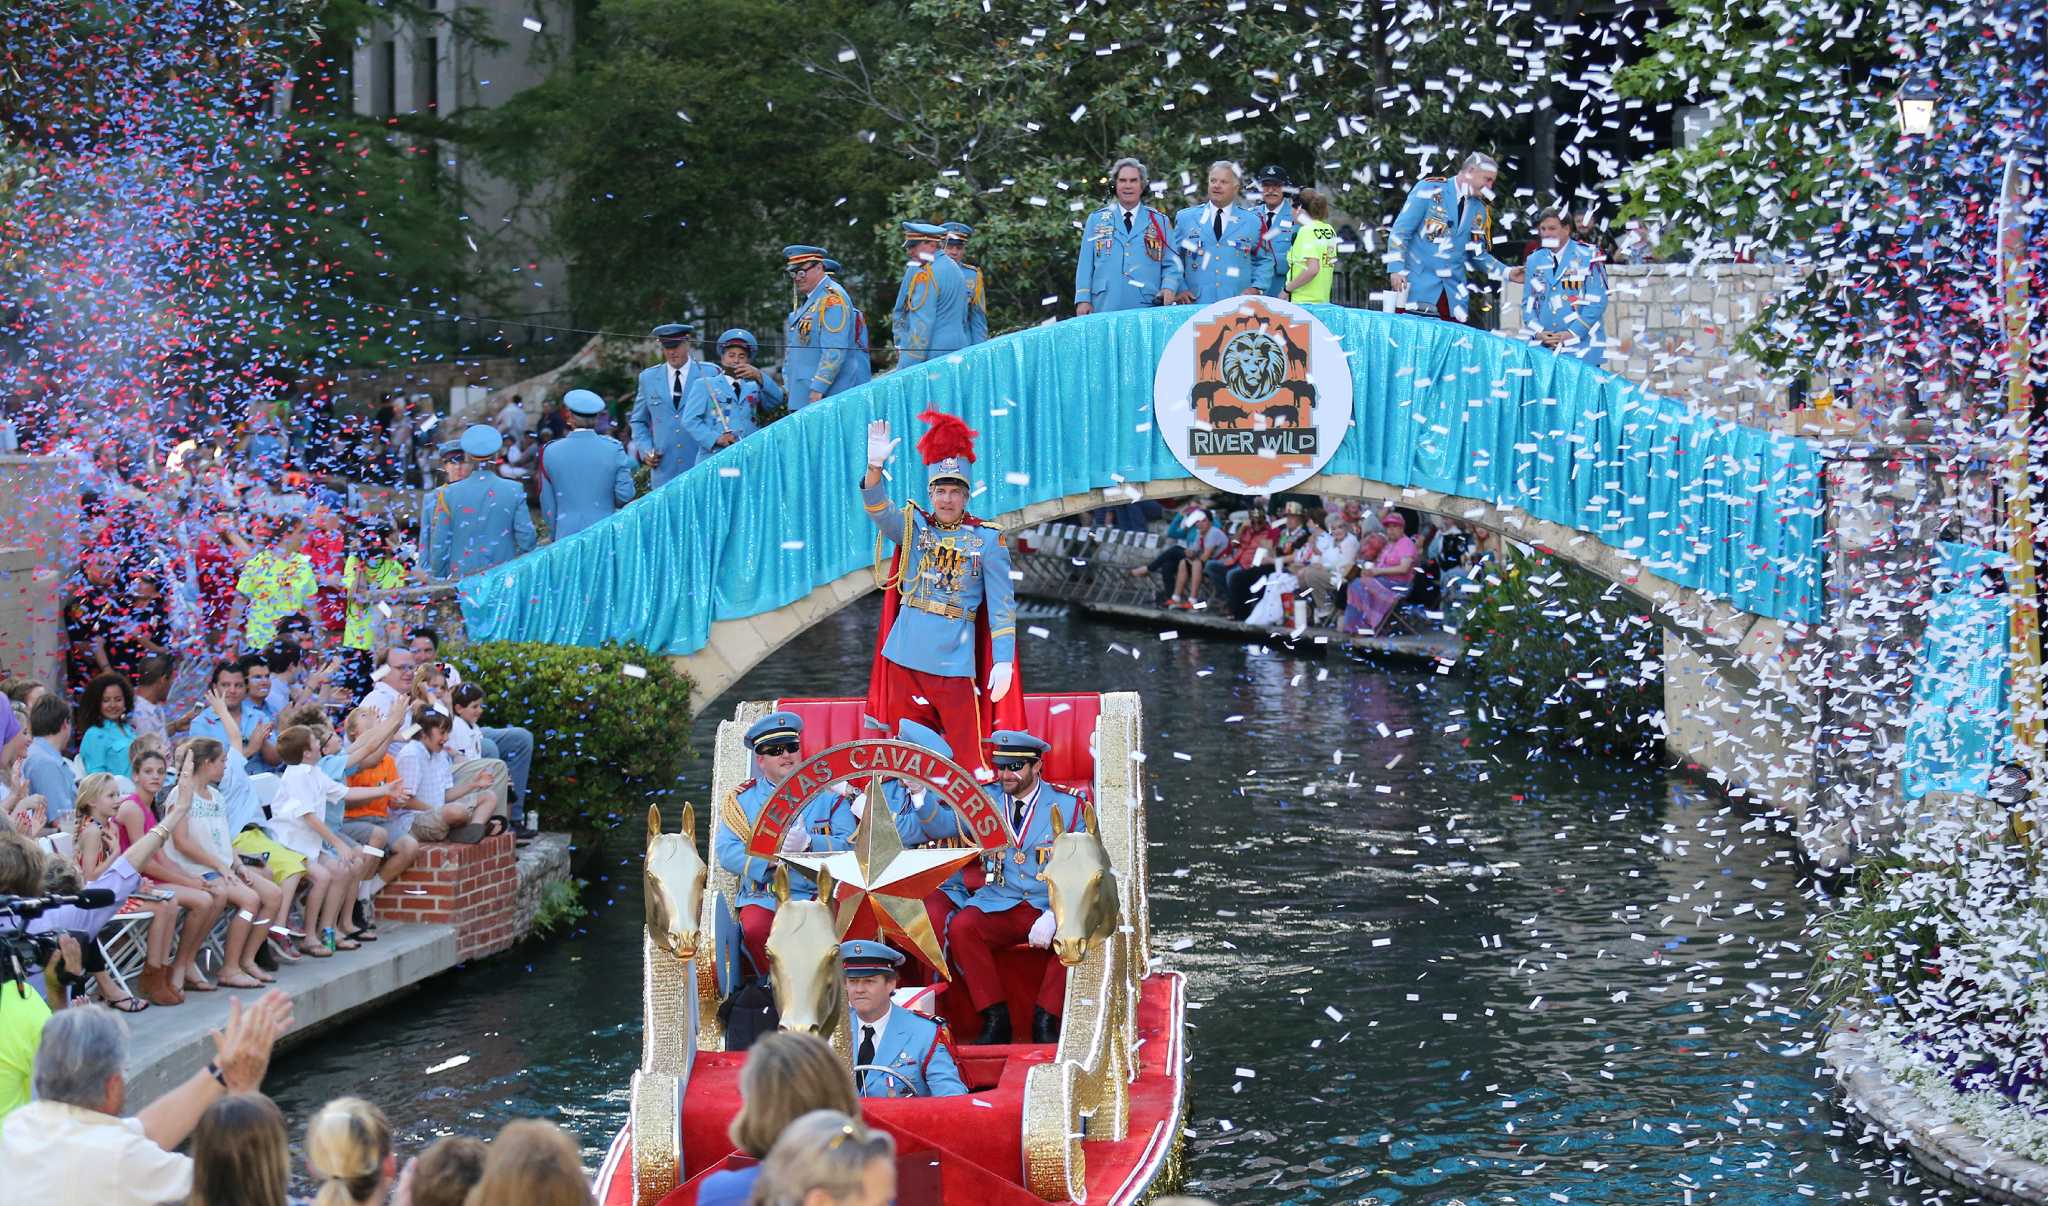 History of Fiesta River Parade